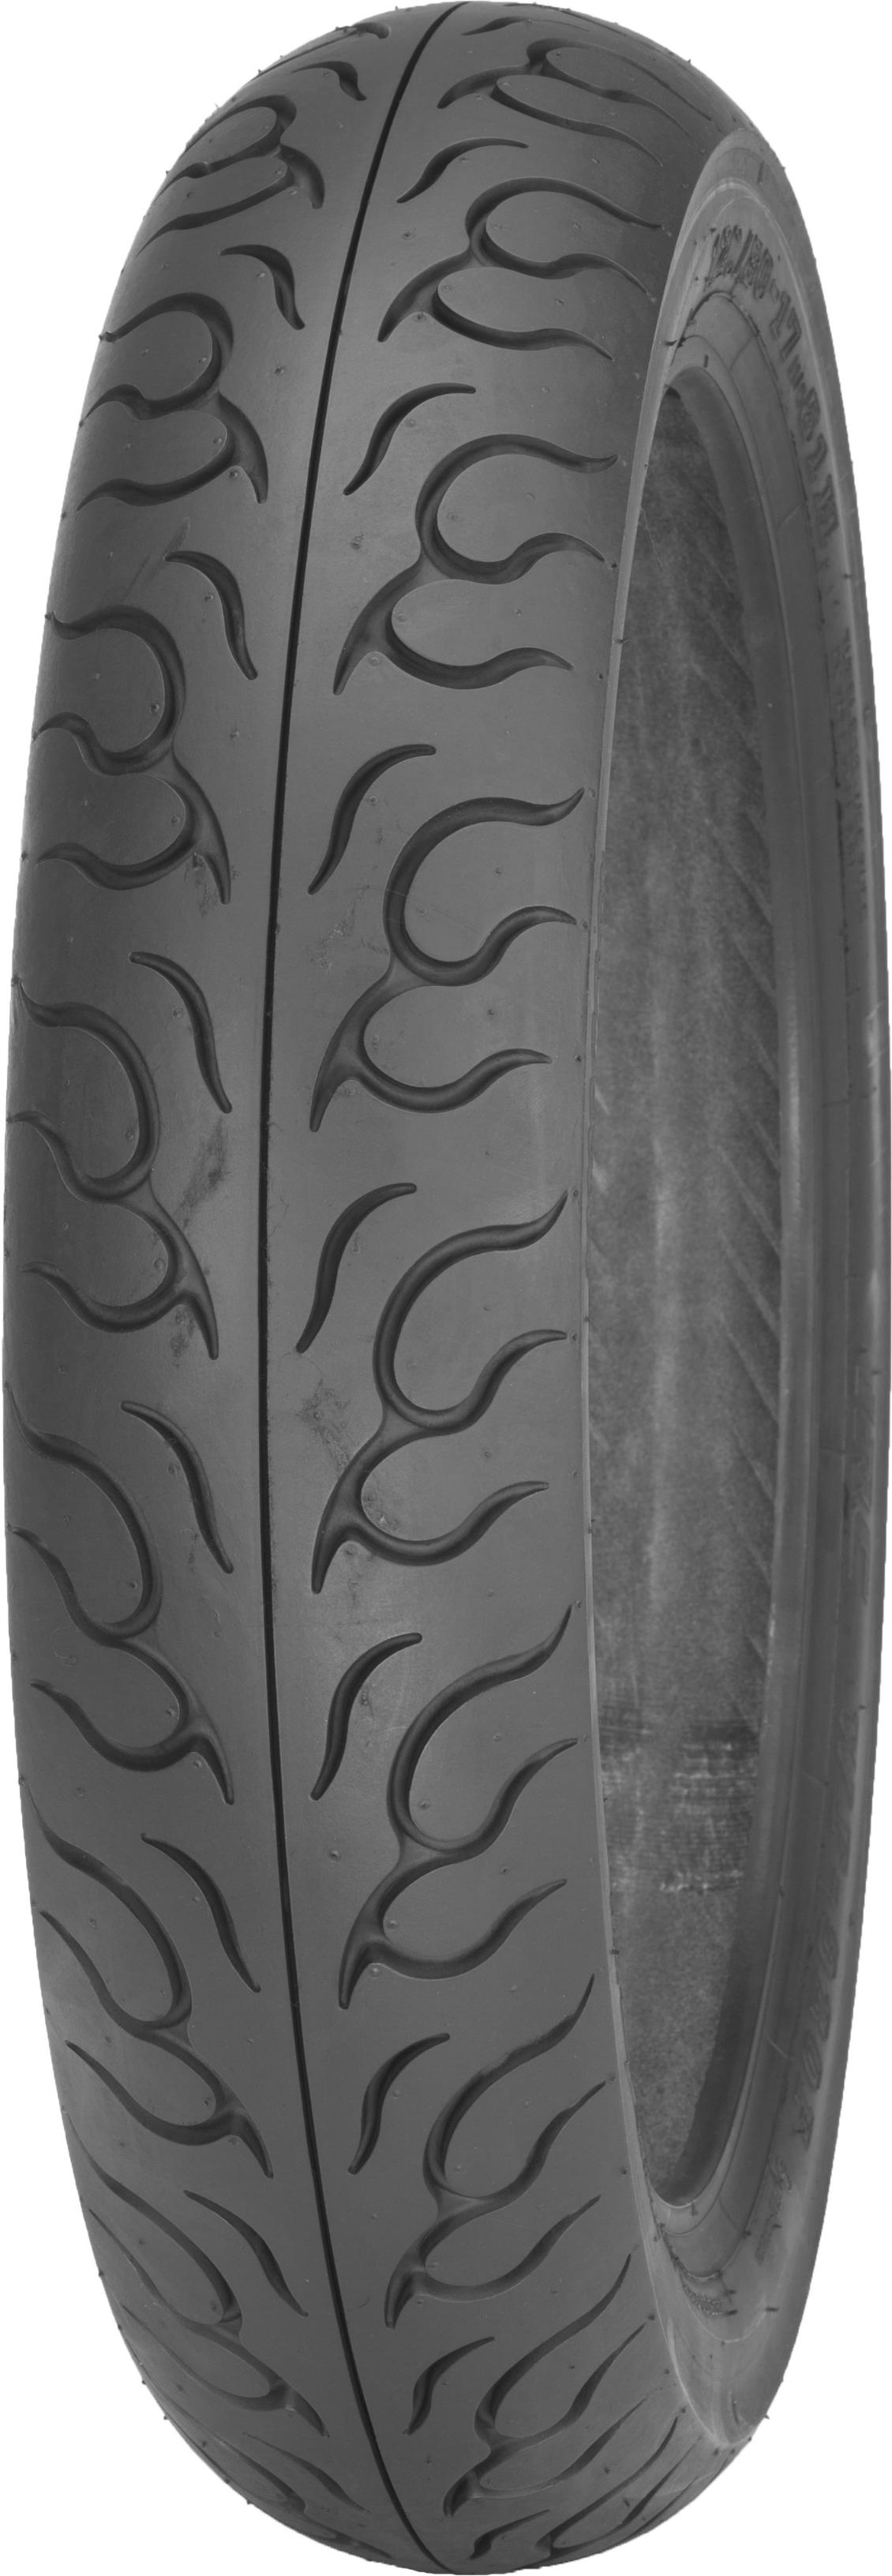 Irc - Tire Wf-920 Front 3.00-19 49h Bias - 301674